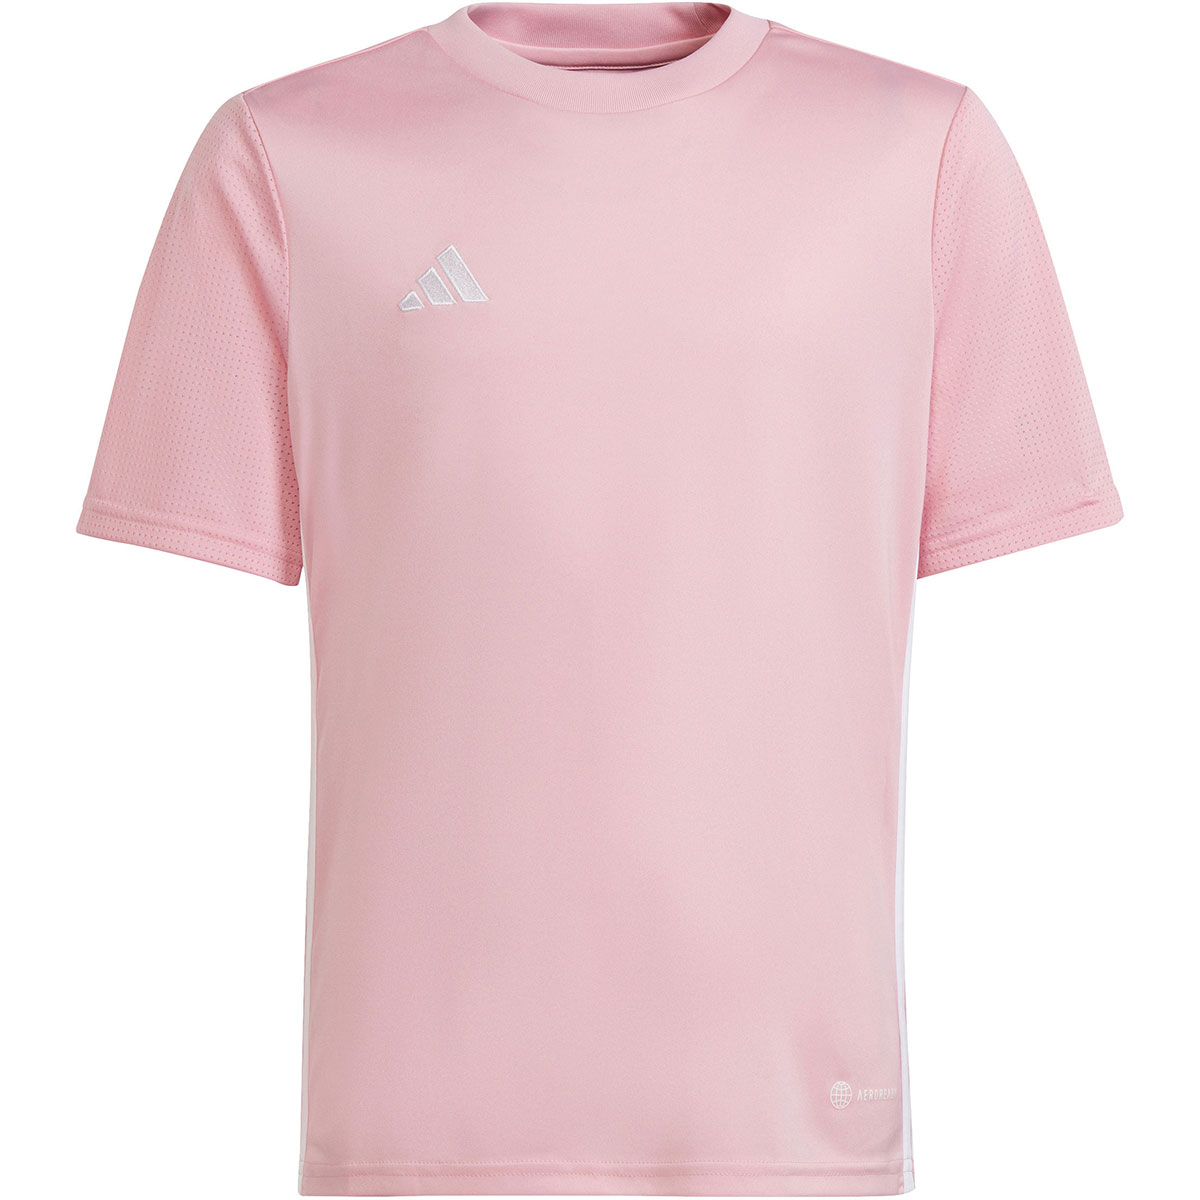 Adidas Kinder Trikot Tabela 23 rosa-weiß